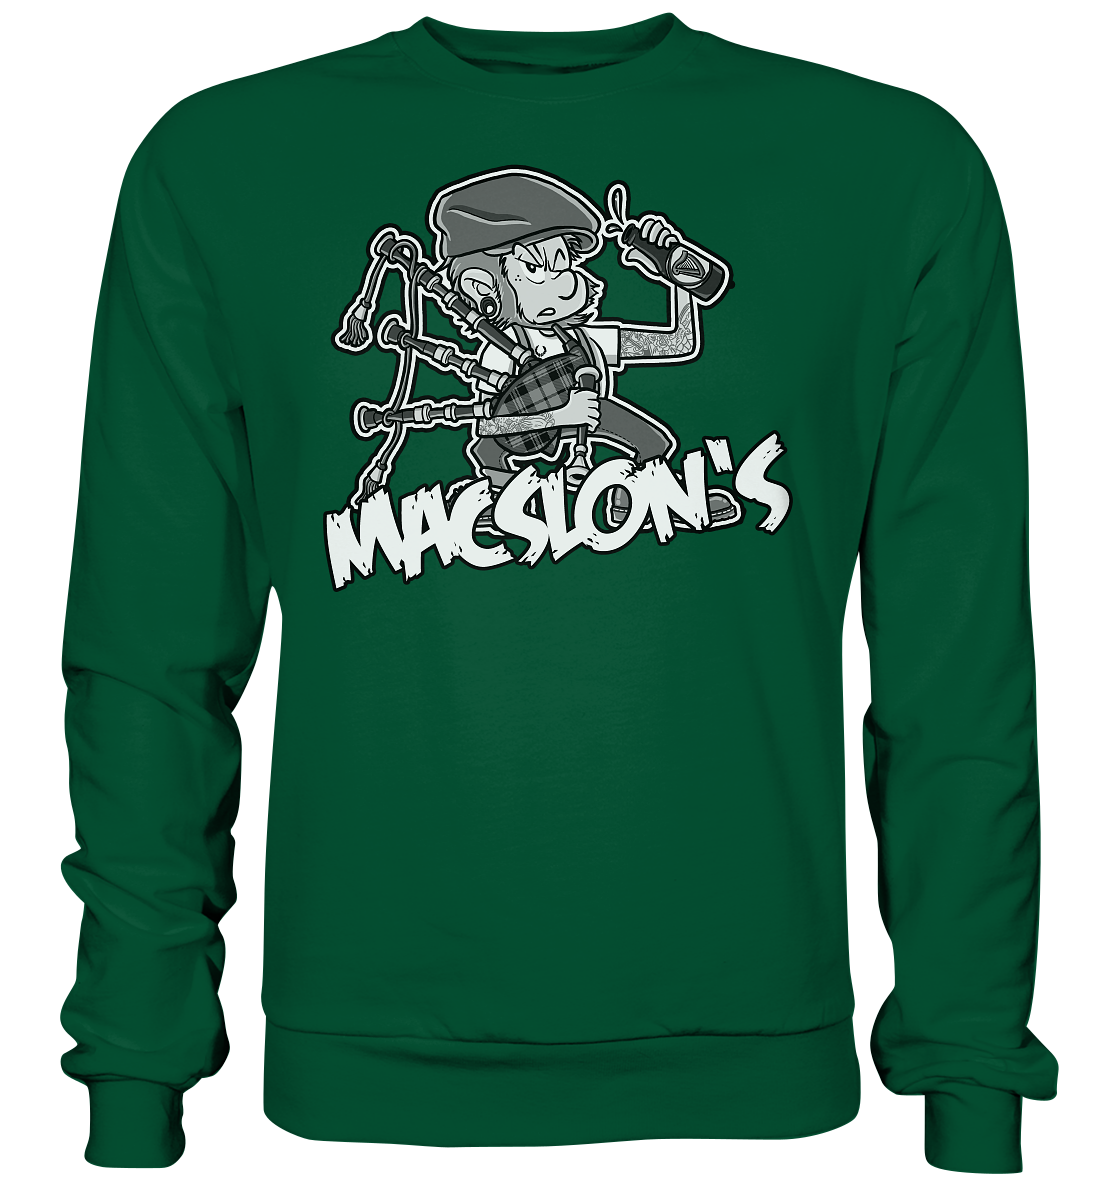 MacSlon's "Piper" - Basic Sweatshirt